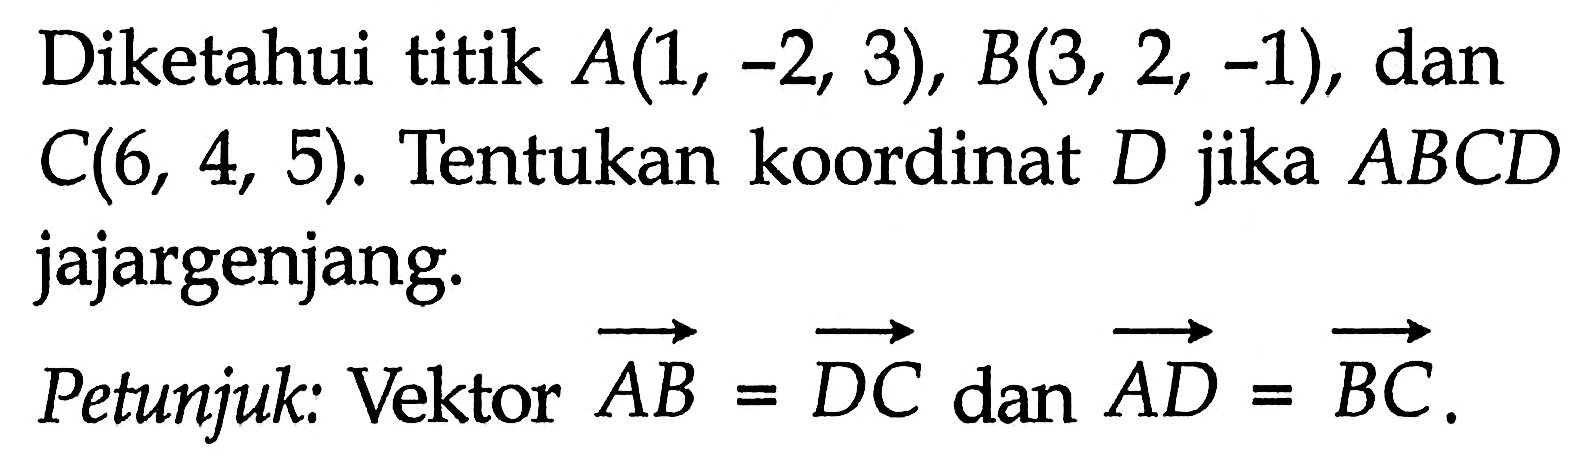 Diketahui titik A(1,-2,3), B(3,2,-1), dan C(6,4,5). Tentukan koordinat D jika ABCD jajargenjang.Petunjuk: Vektor AB=DC dan AD=BC.